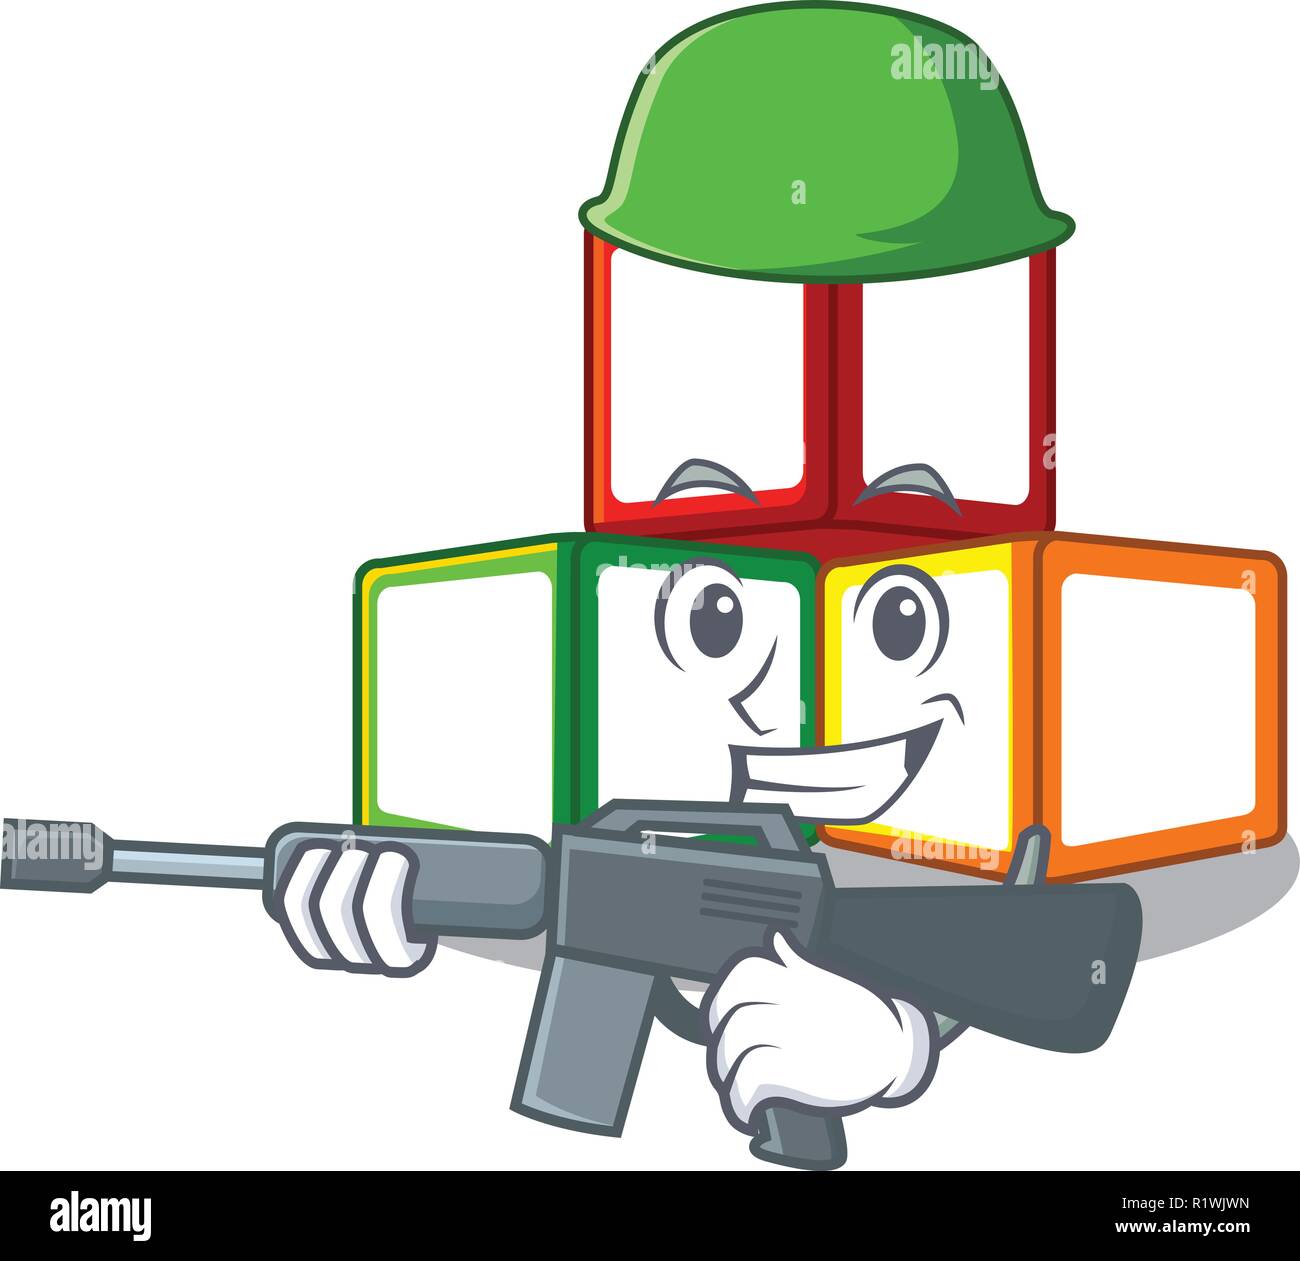 Army bright toy block bricks on cartoon Stock Vector